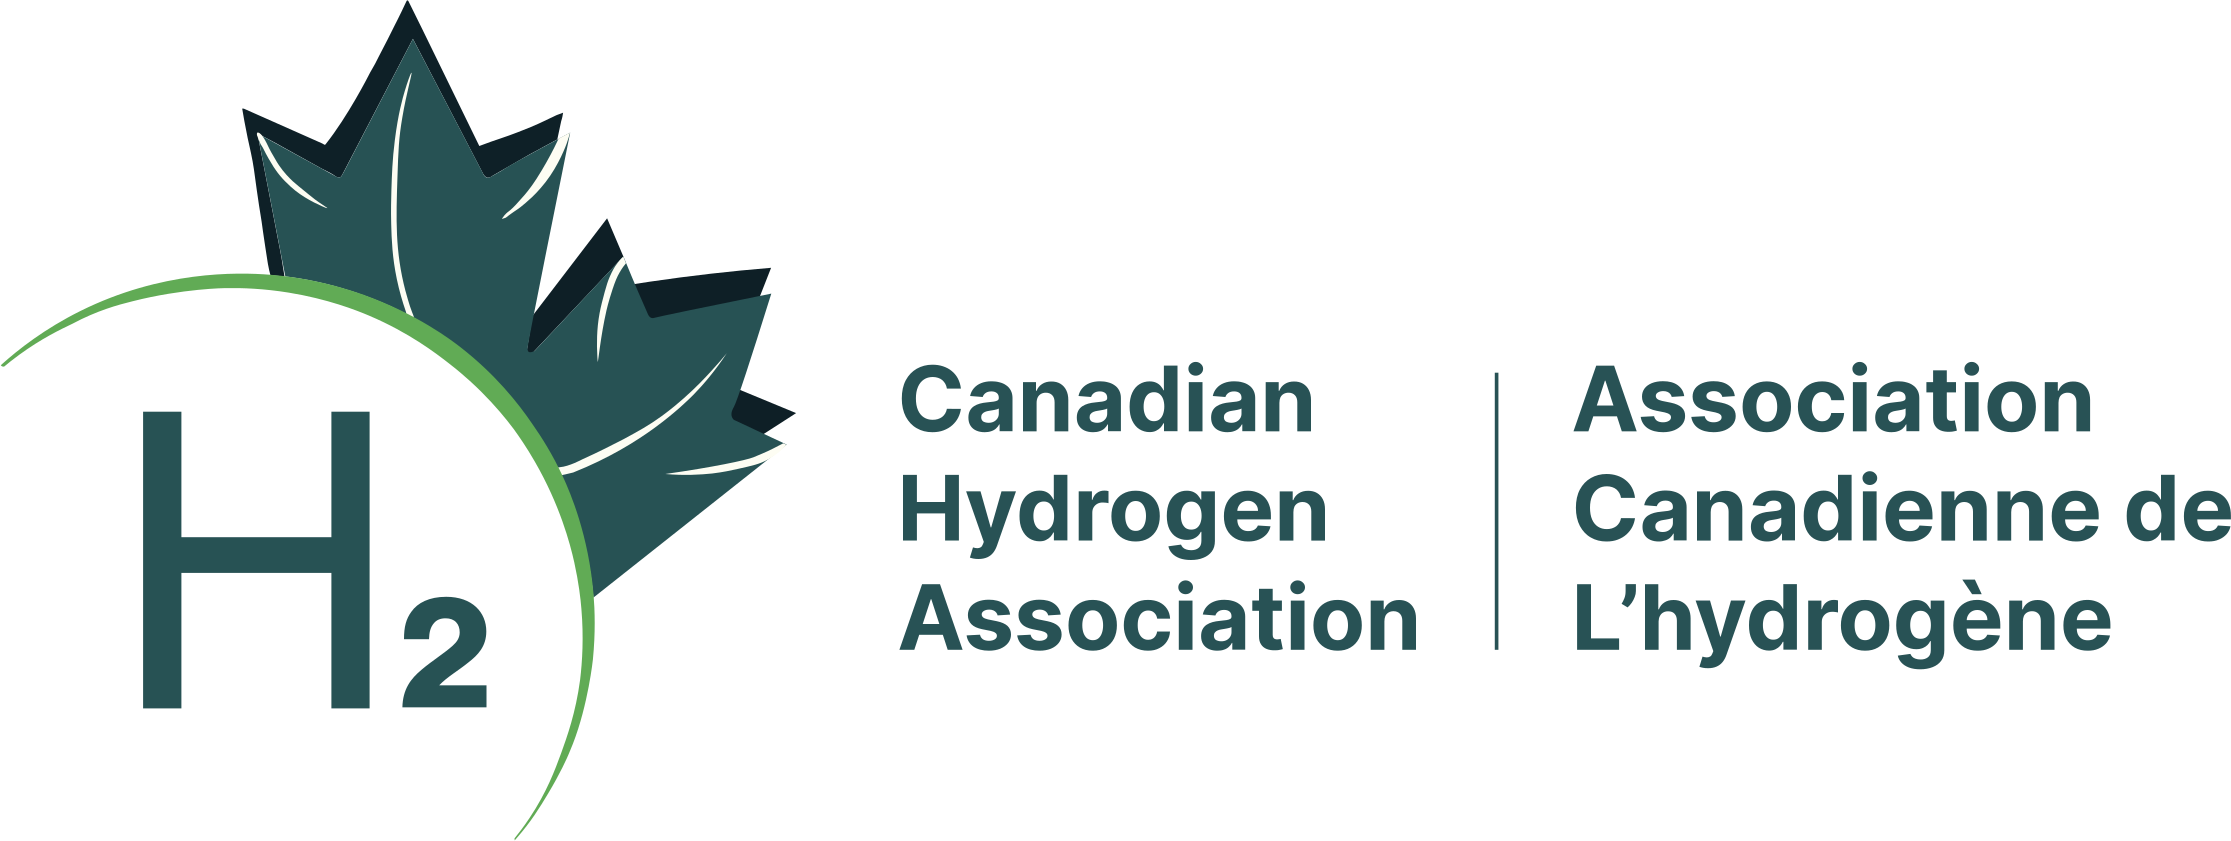 Canadian Hydrogen Association logo